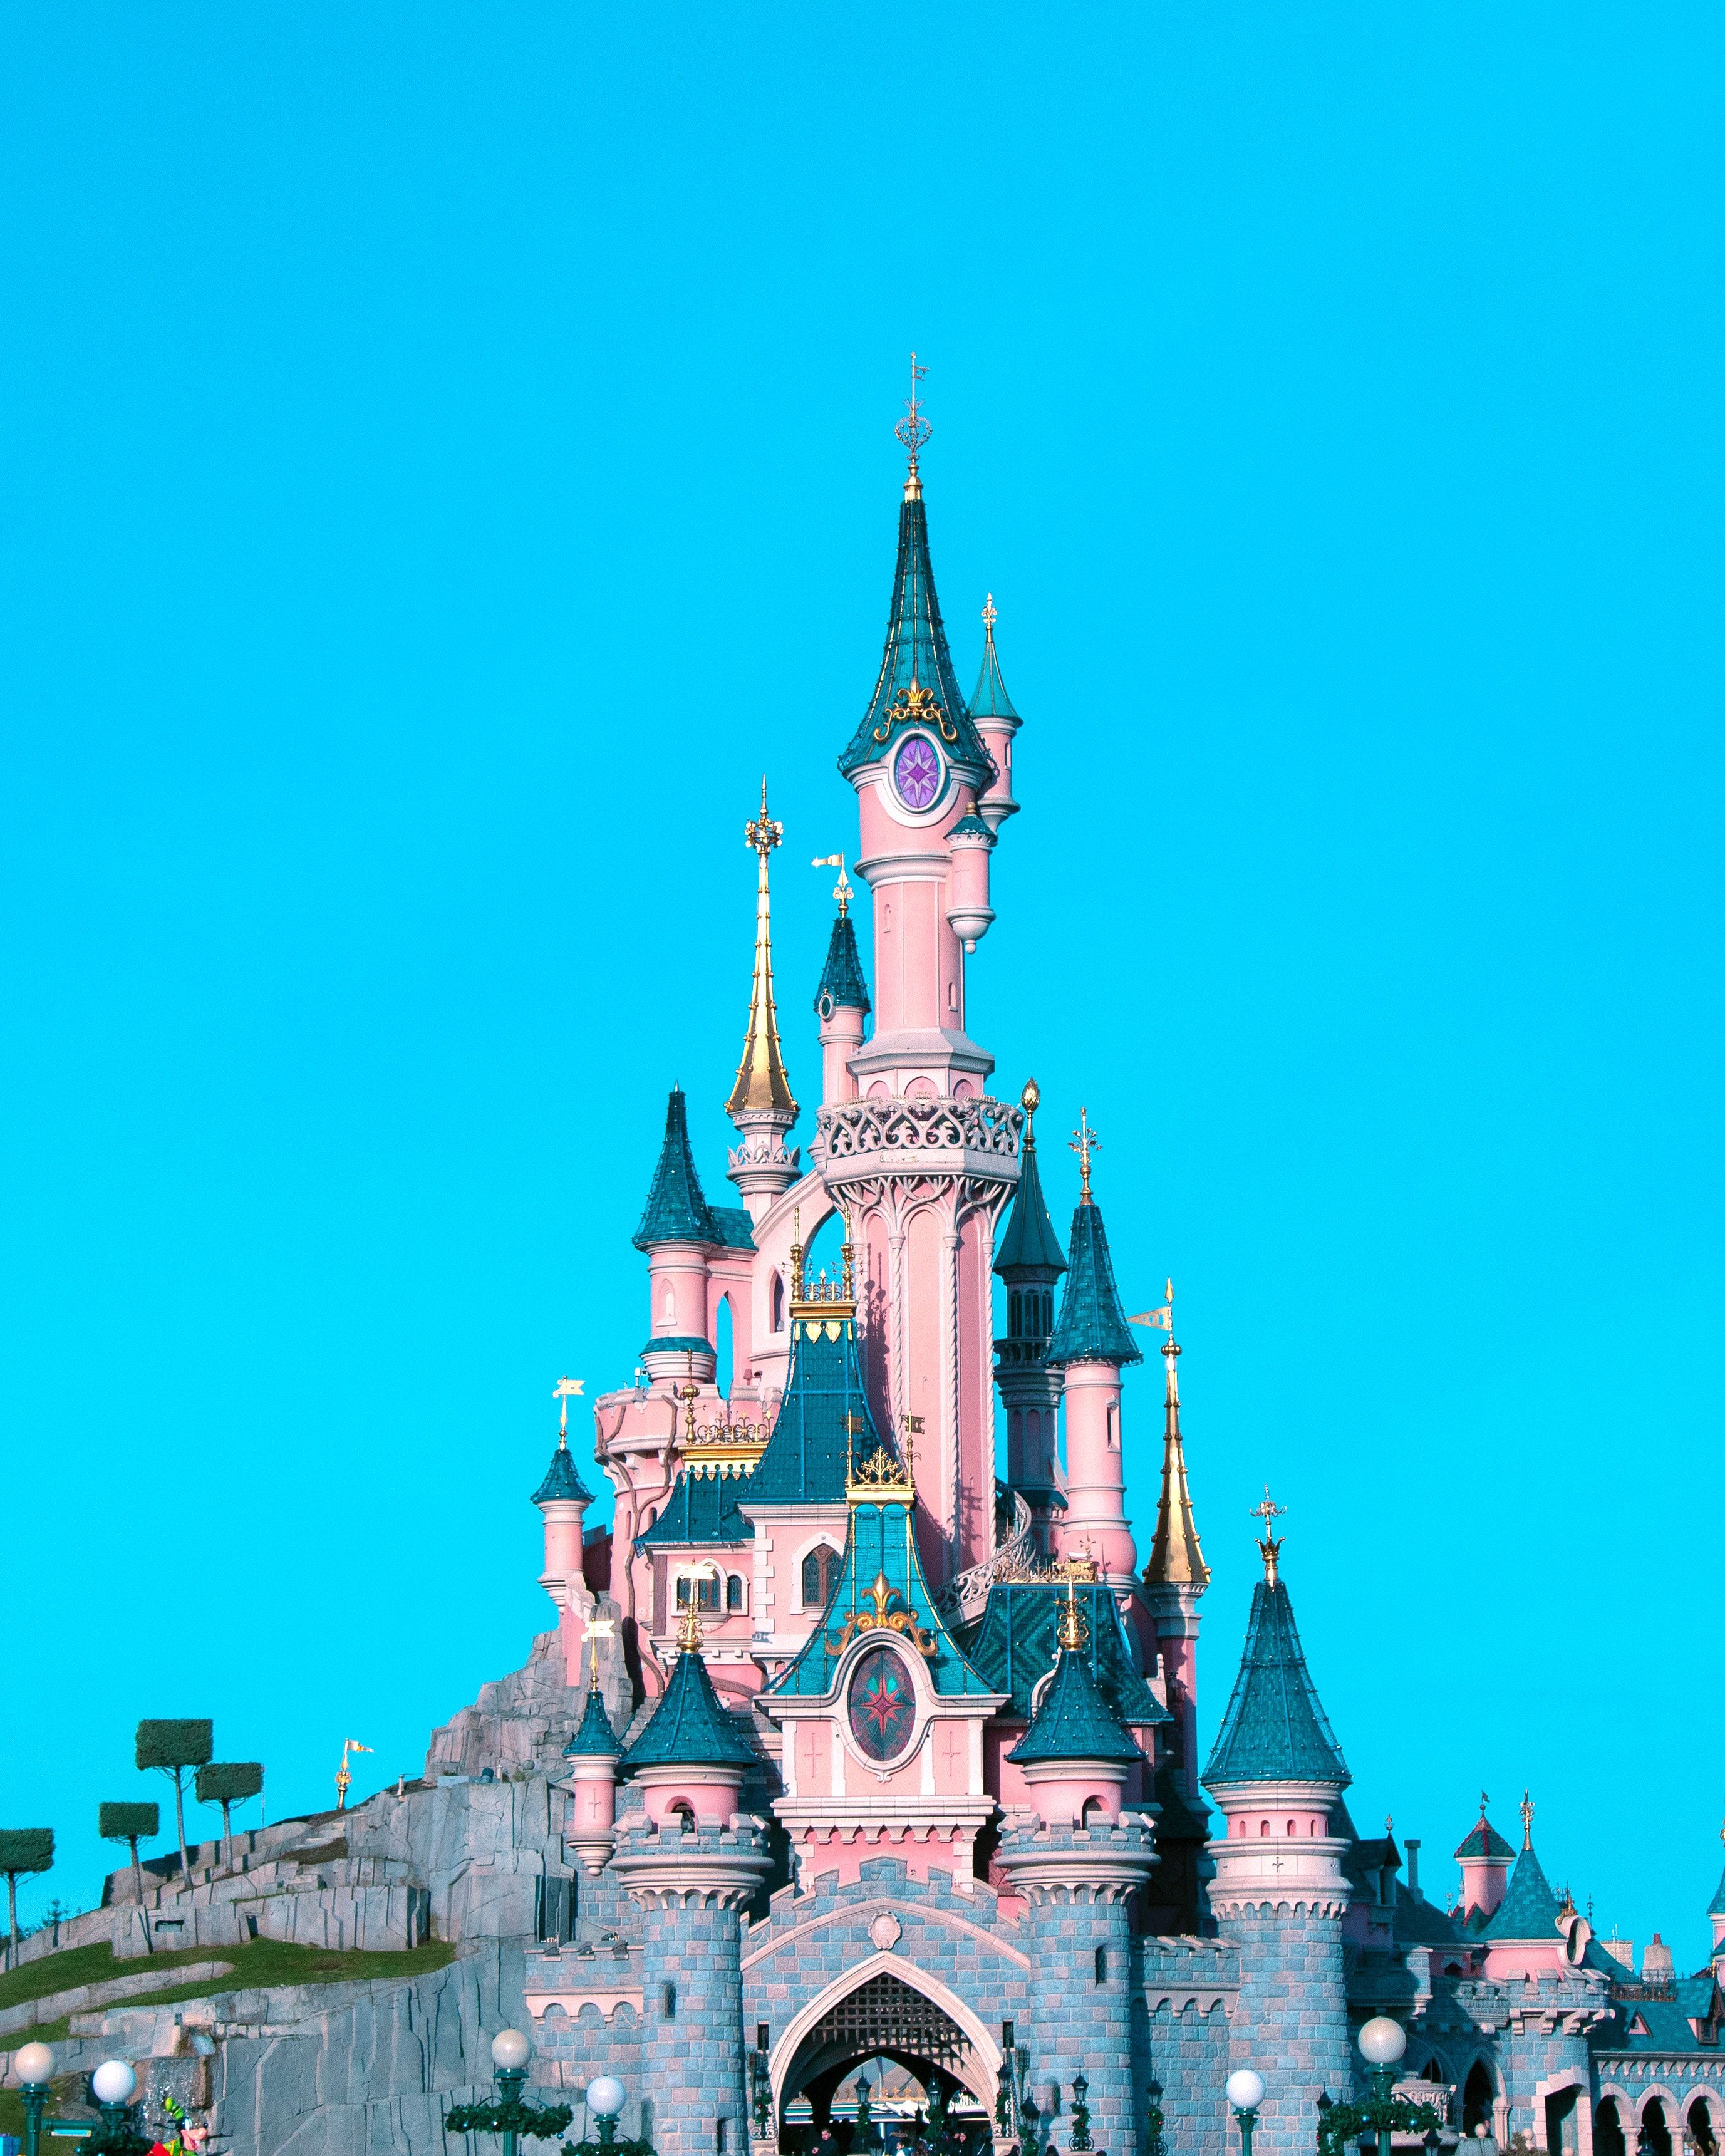 Disneyland Paris Picture. Download Free Image